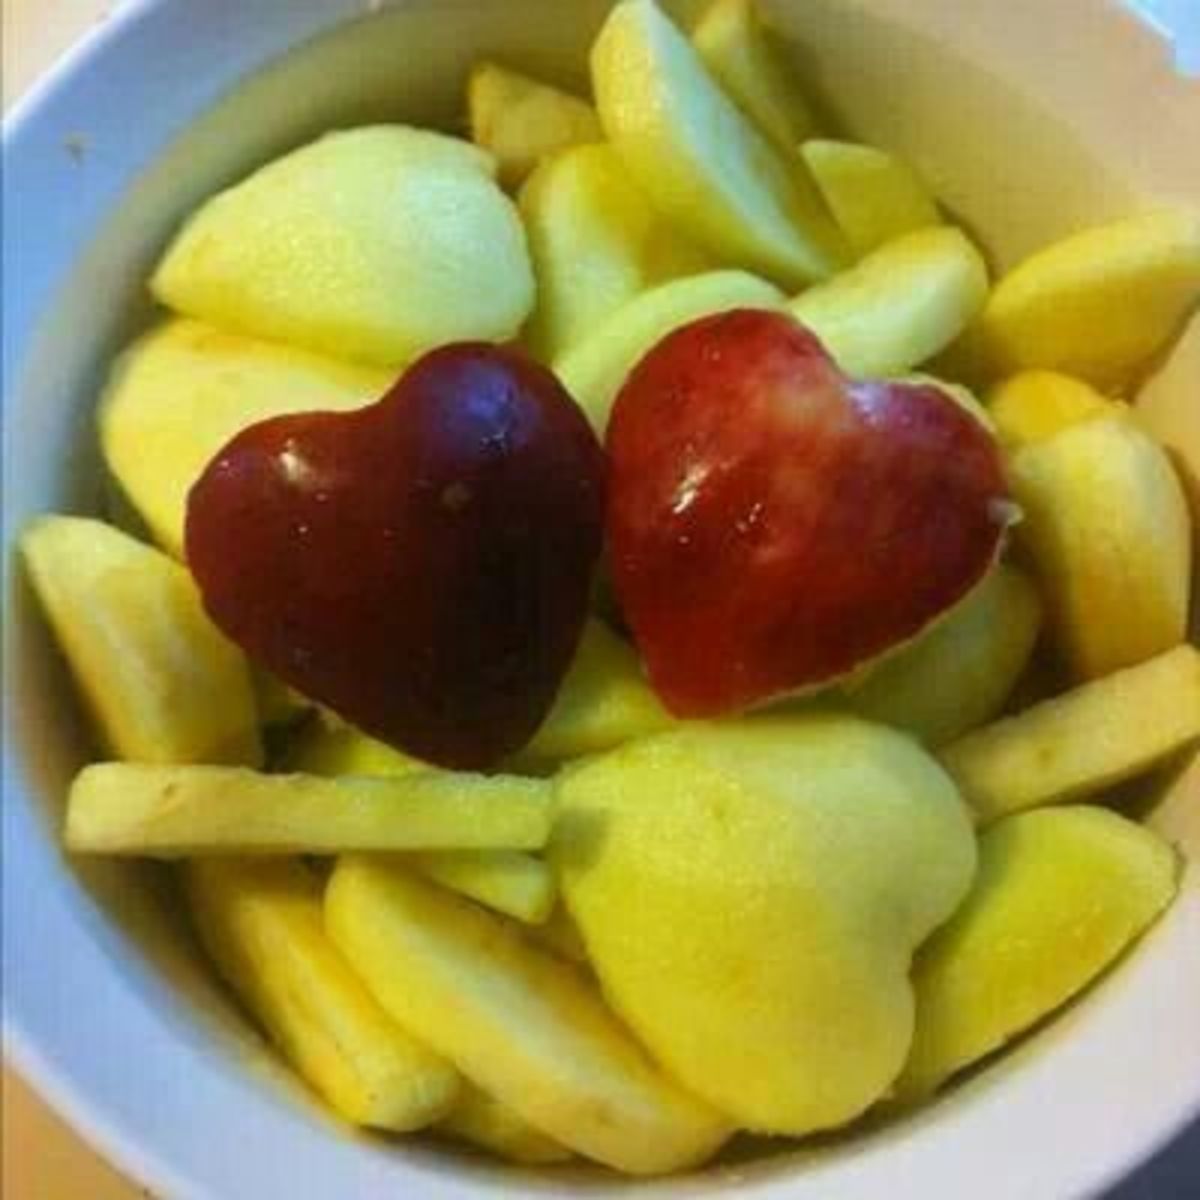 Heart shaped apples